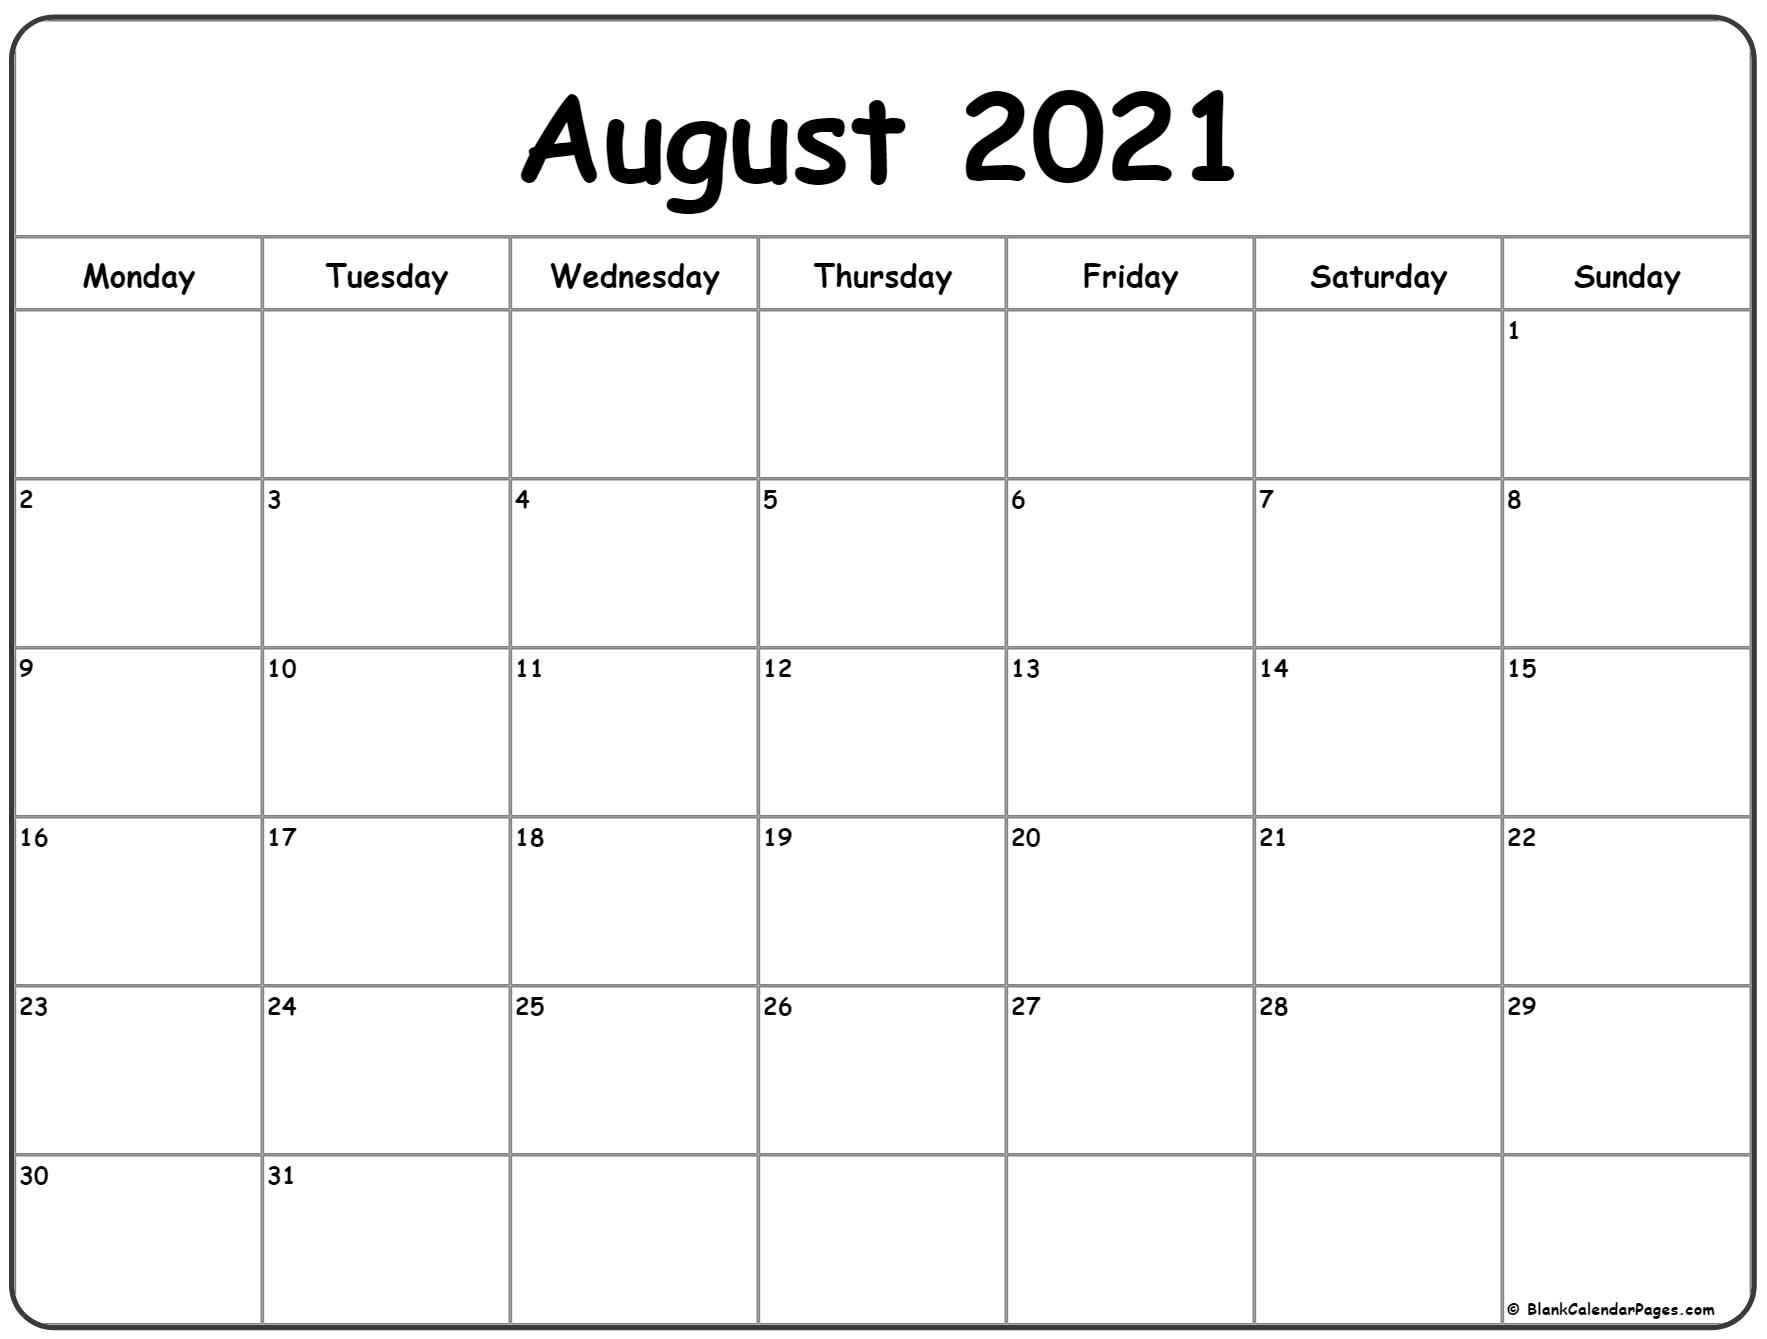 August 2021 Monday Calendar | Monday To Sunday